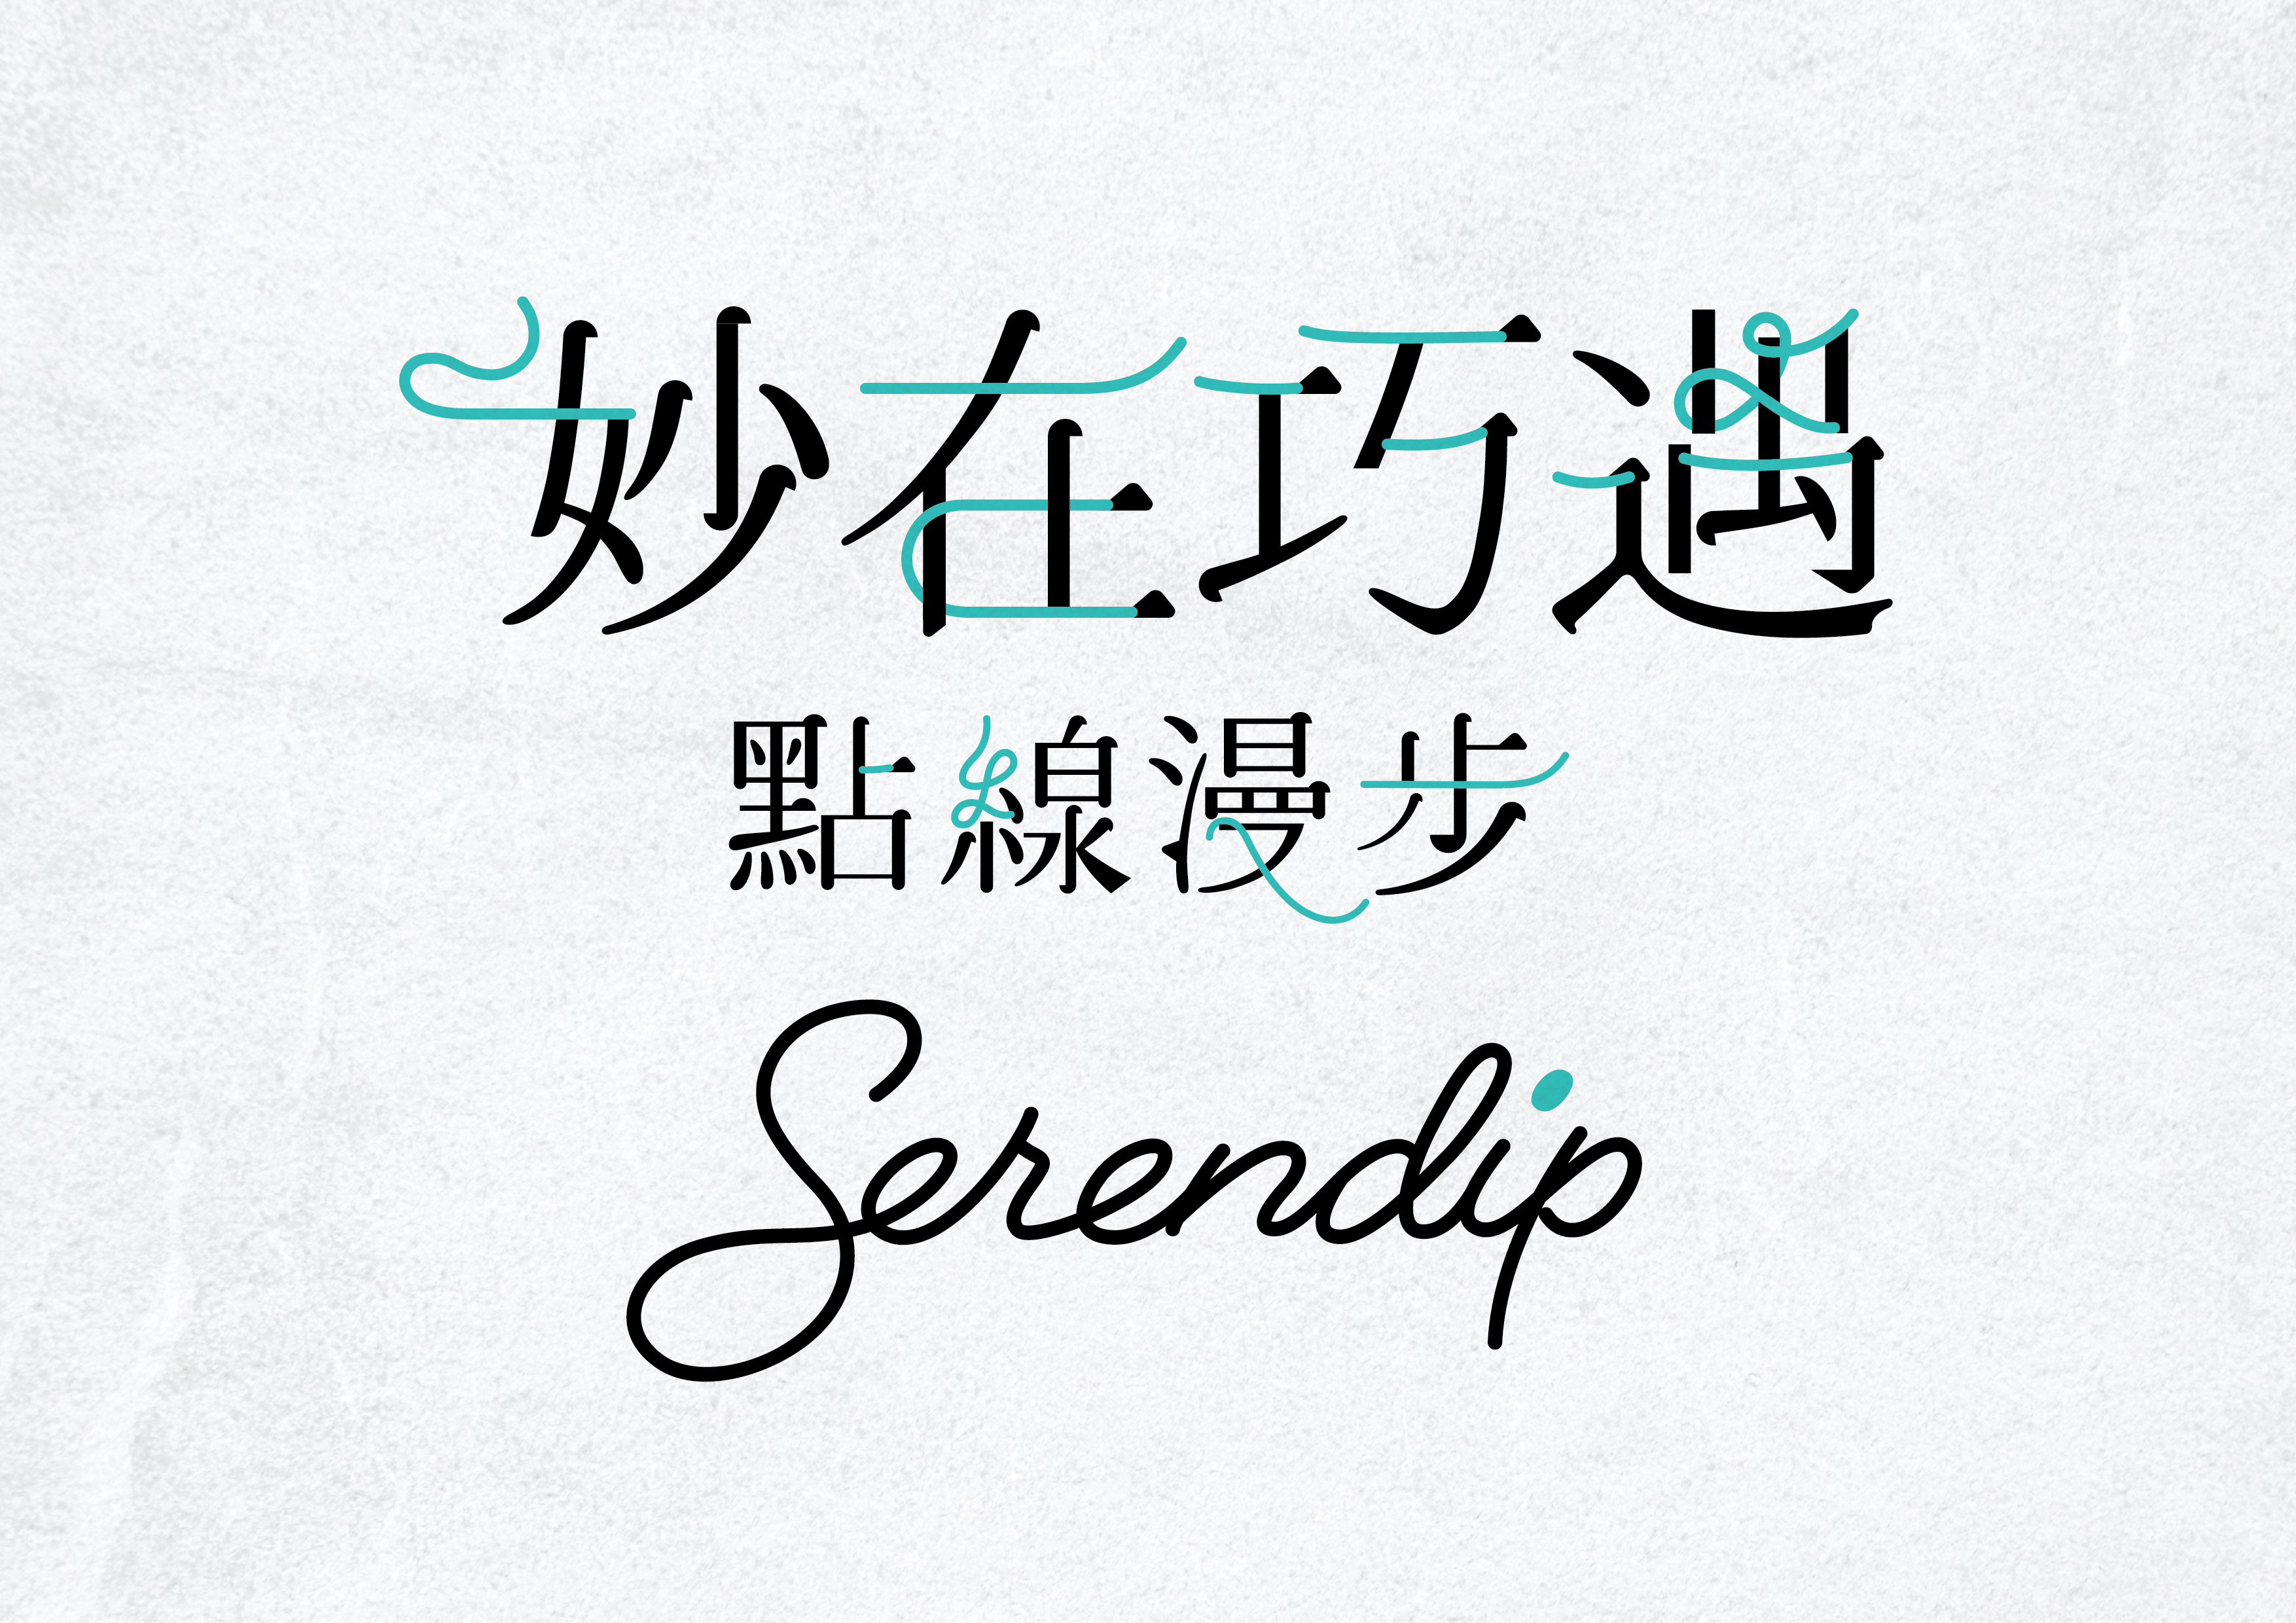 Serendip - Take a Line for a Walk